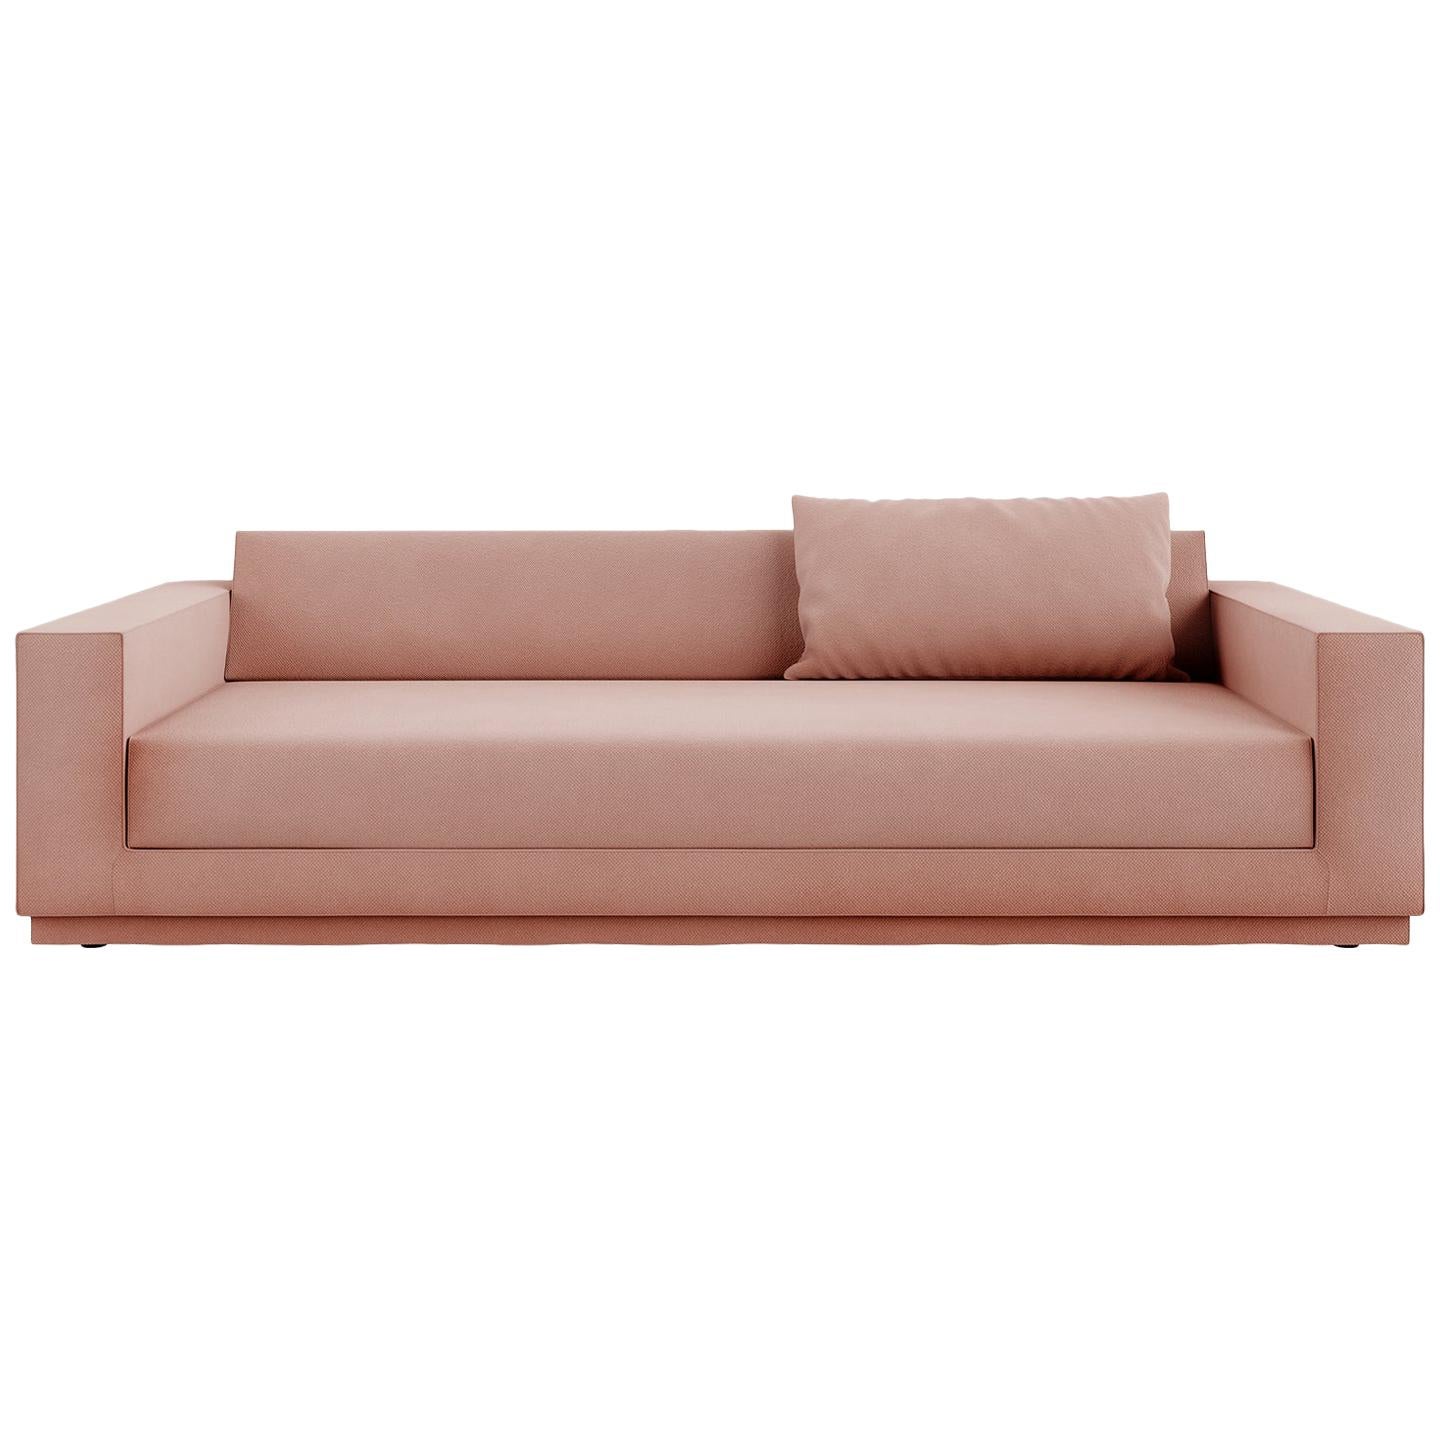 Tacchini Havana Three-Seater Pink Sofa in Gloss Aluminum Frame by Lievore Molina